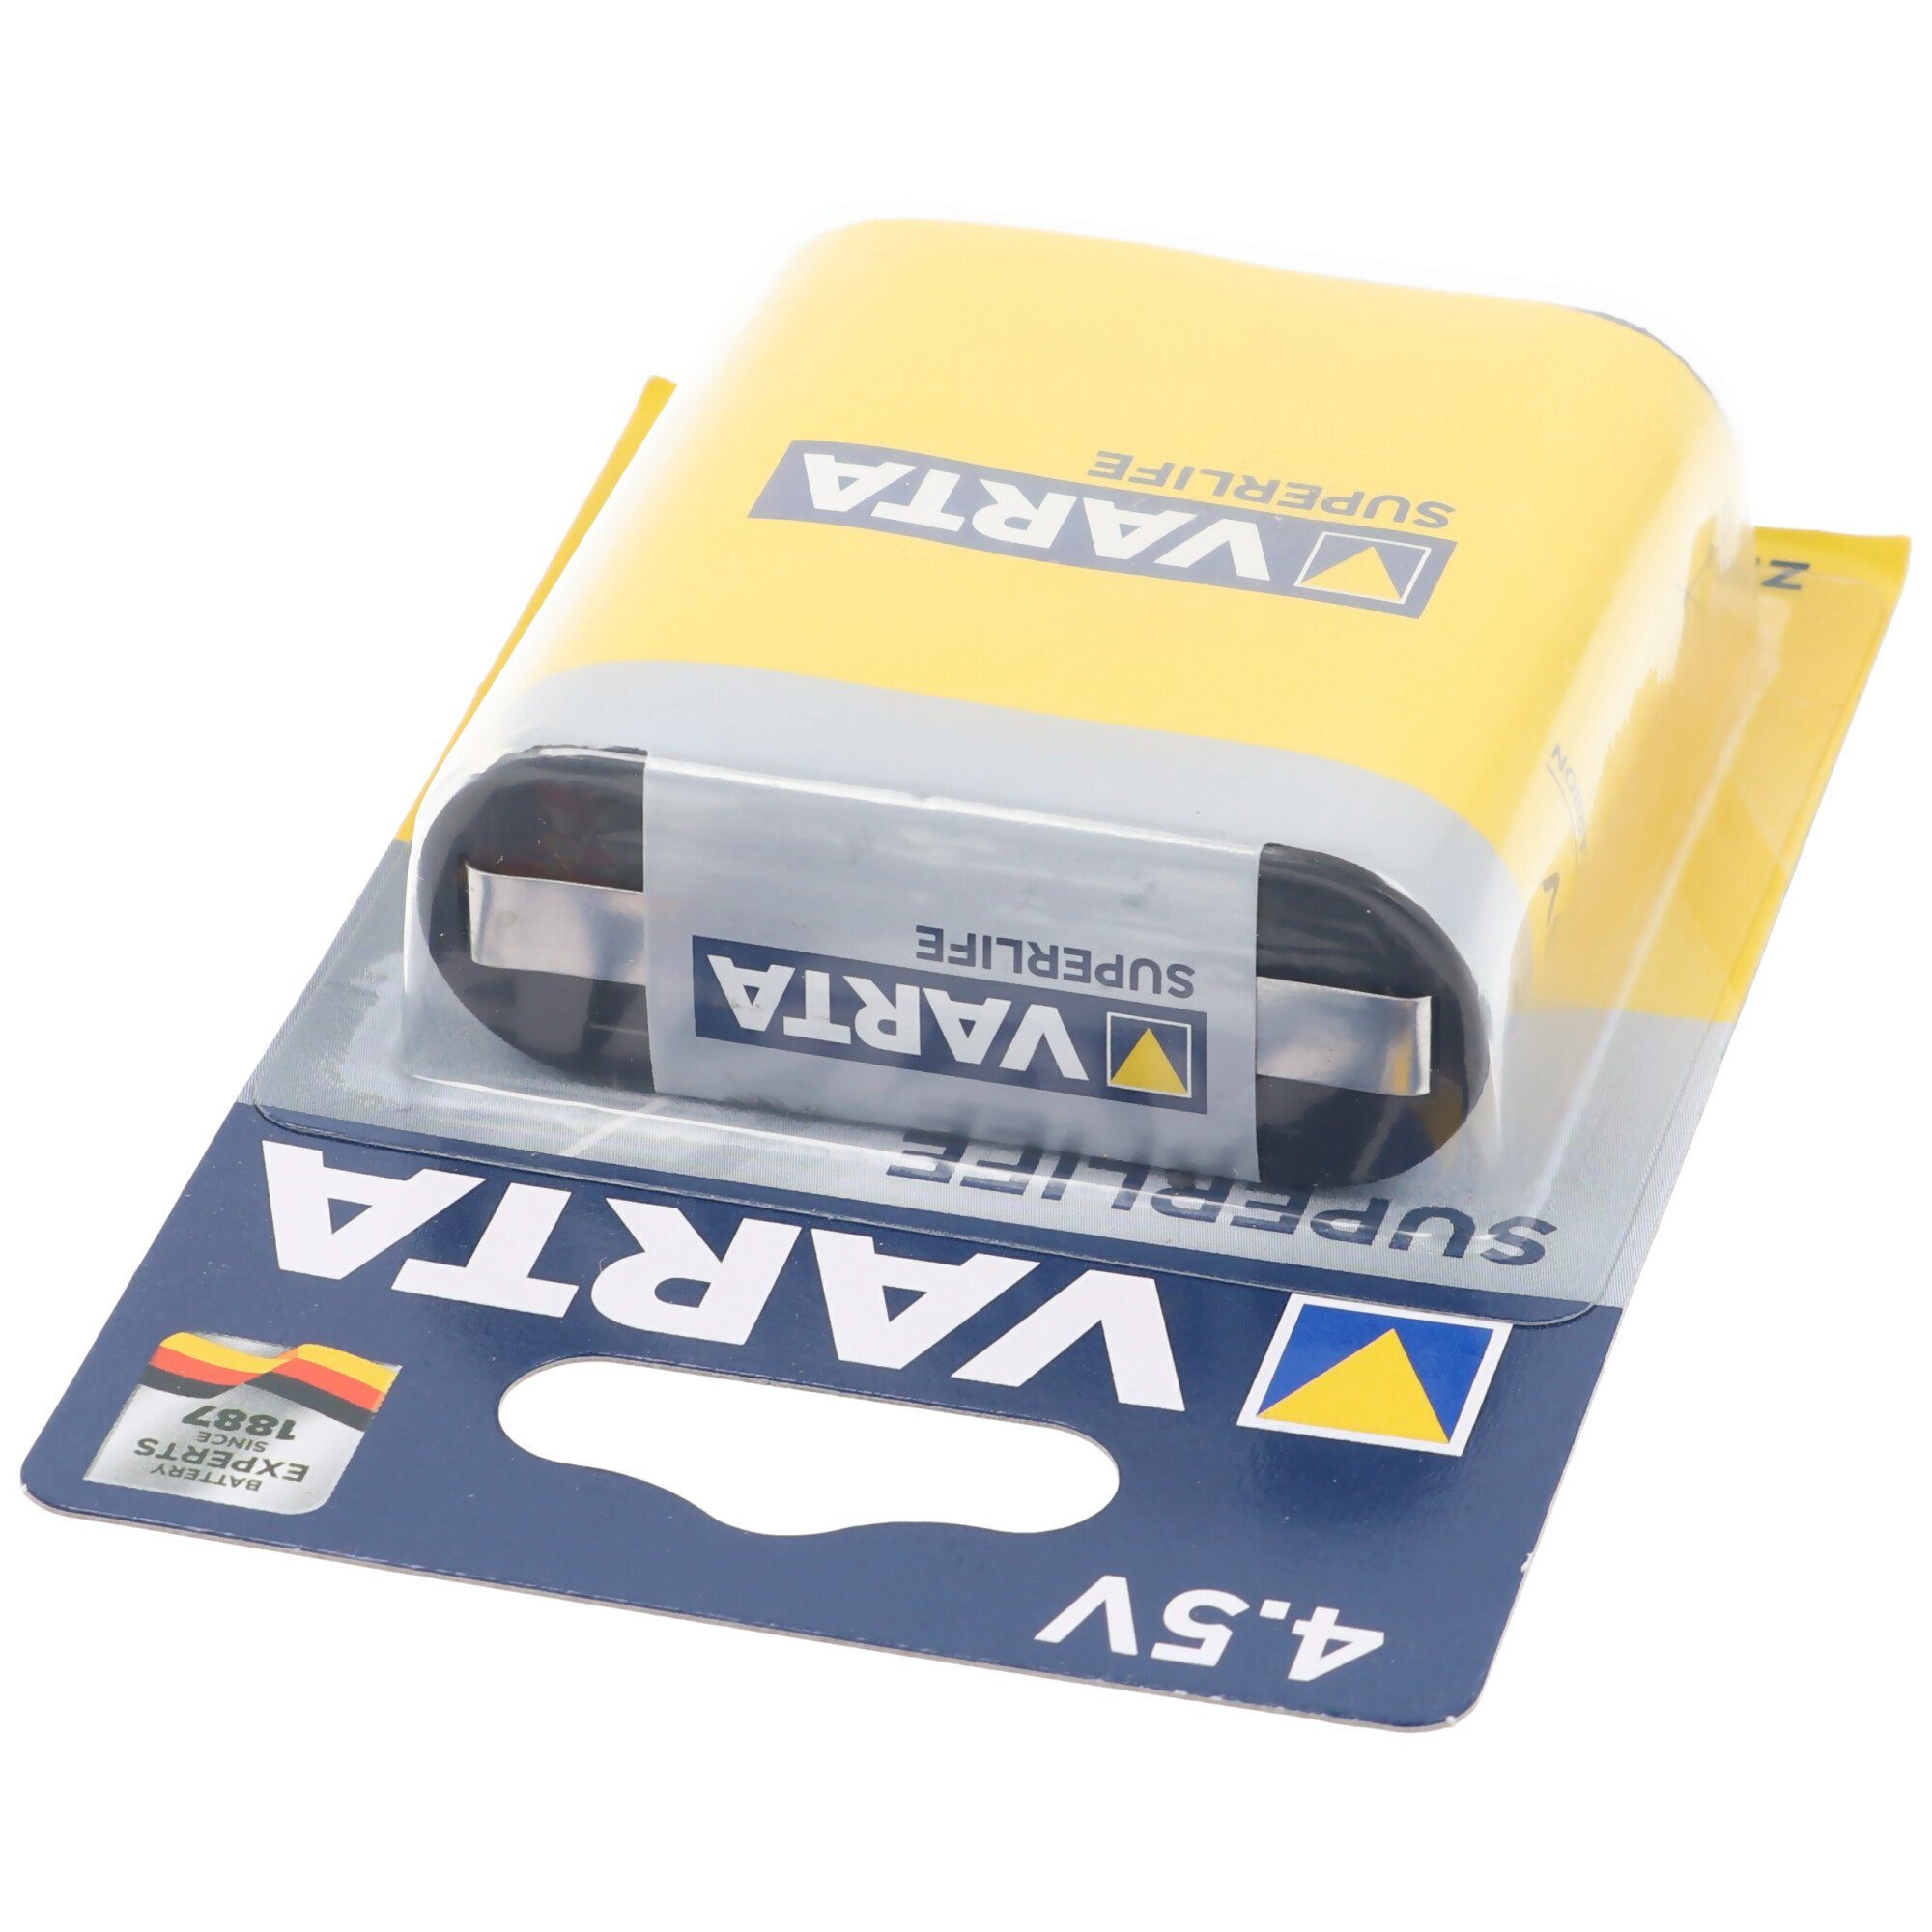 3R12, V) Varta Volt Normal (4,5 VARTA Flachbatterie 3R12P 3012 4,5 Batterie, Superlife